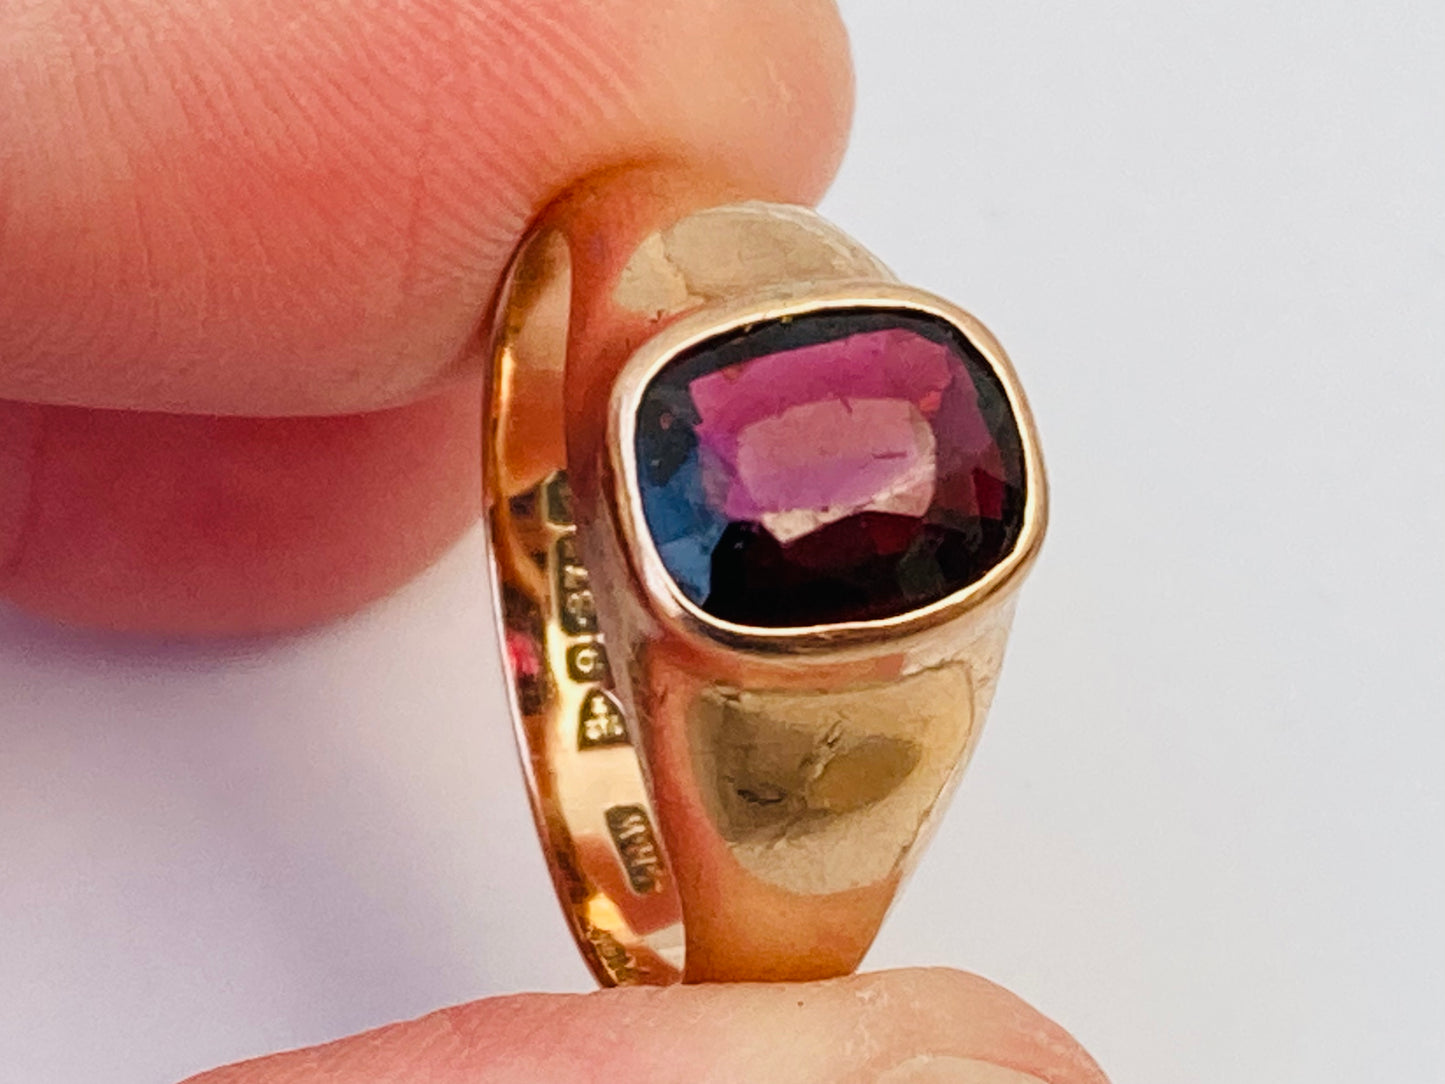 Antique Edwardian 9ct Rose Gold Almandine Garnet Signet Ring